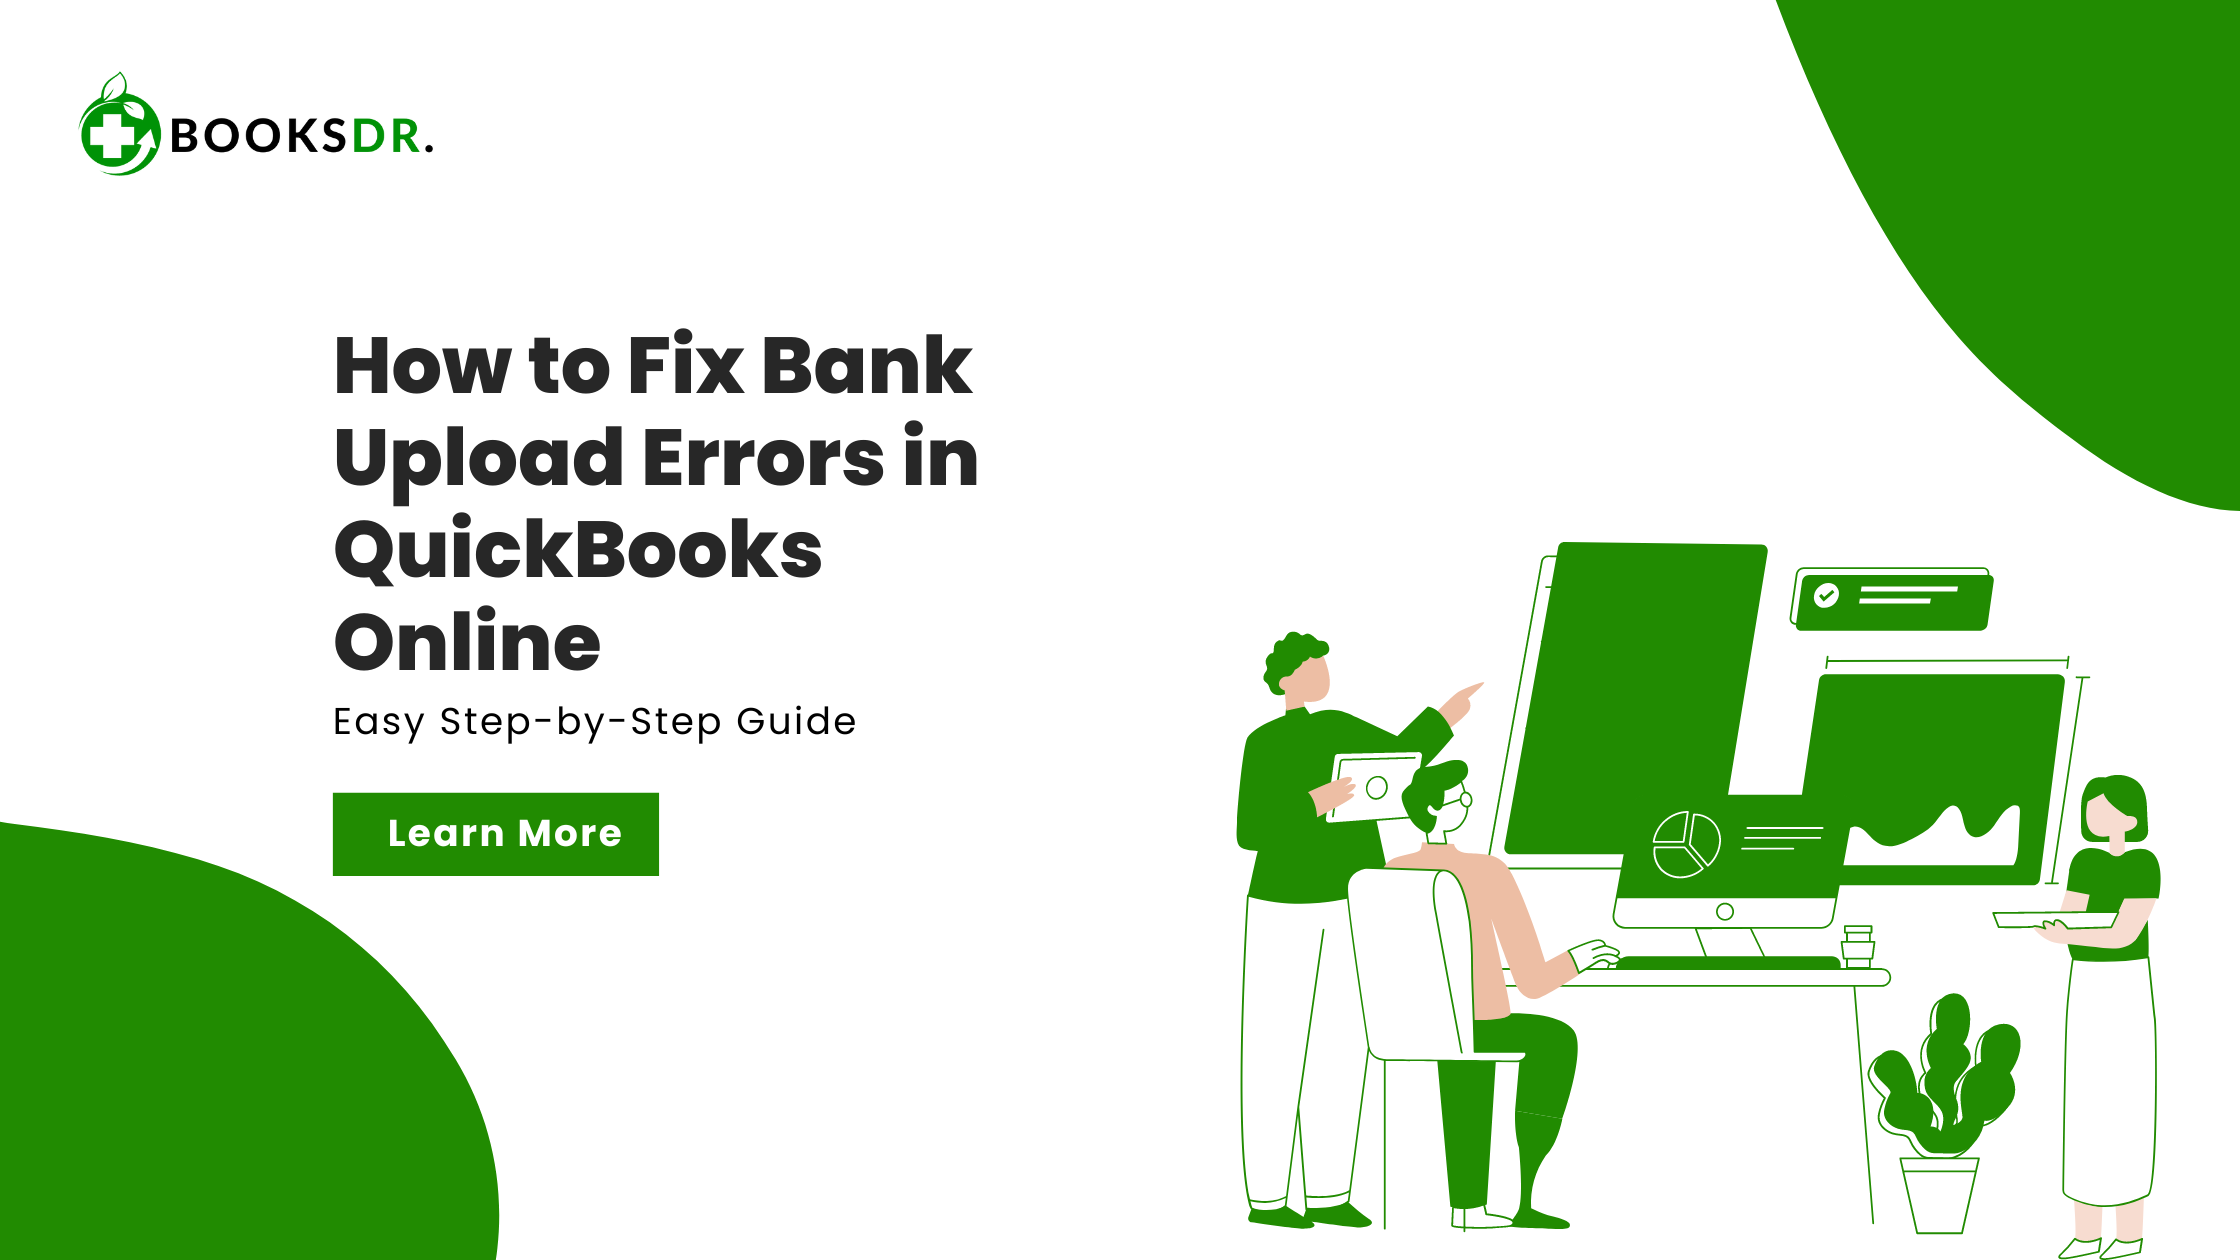 How to Fix Bank Upload Errors in QuickBooks Online